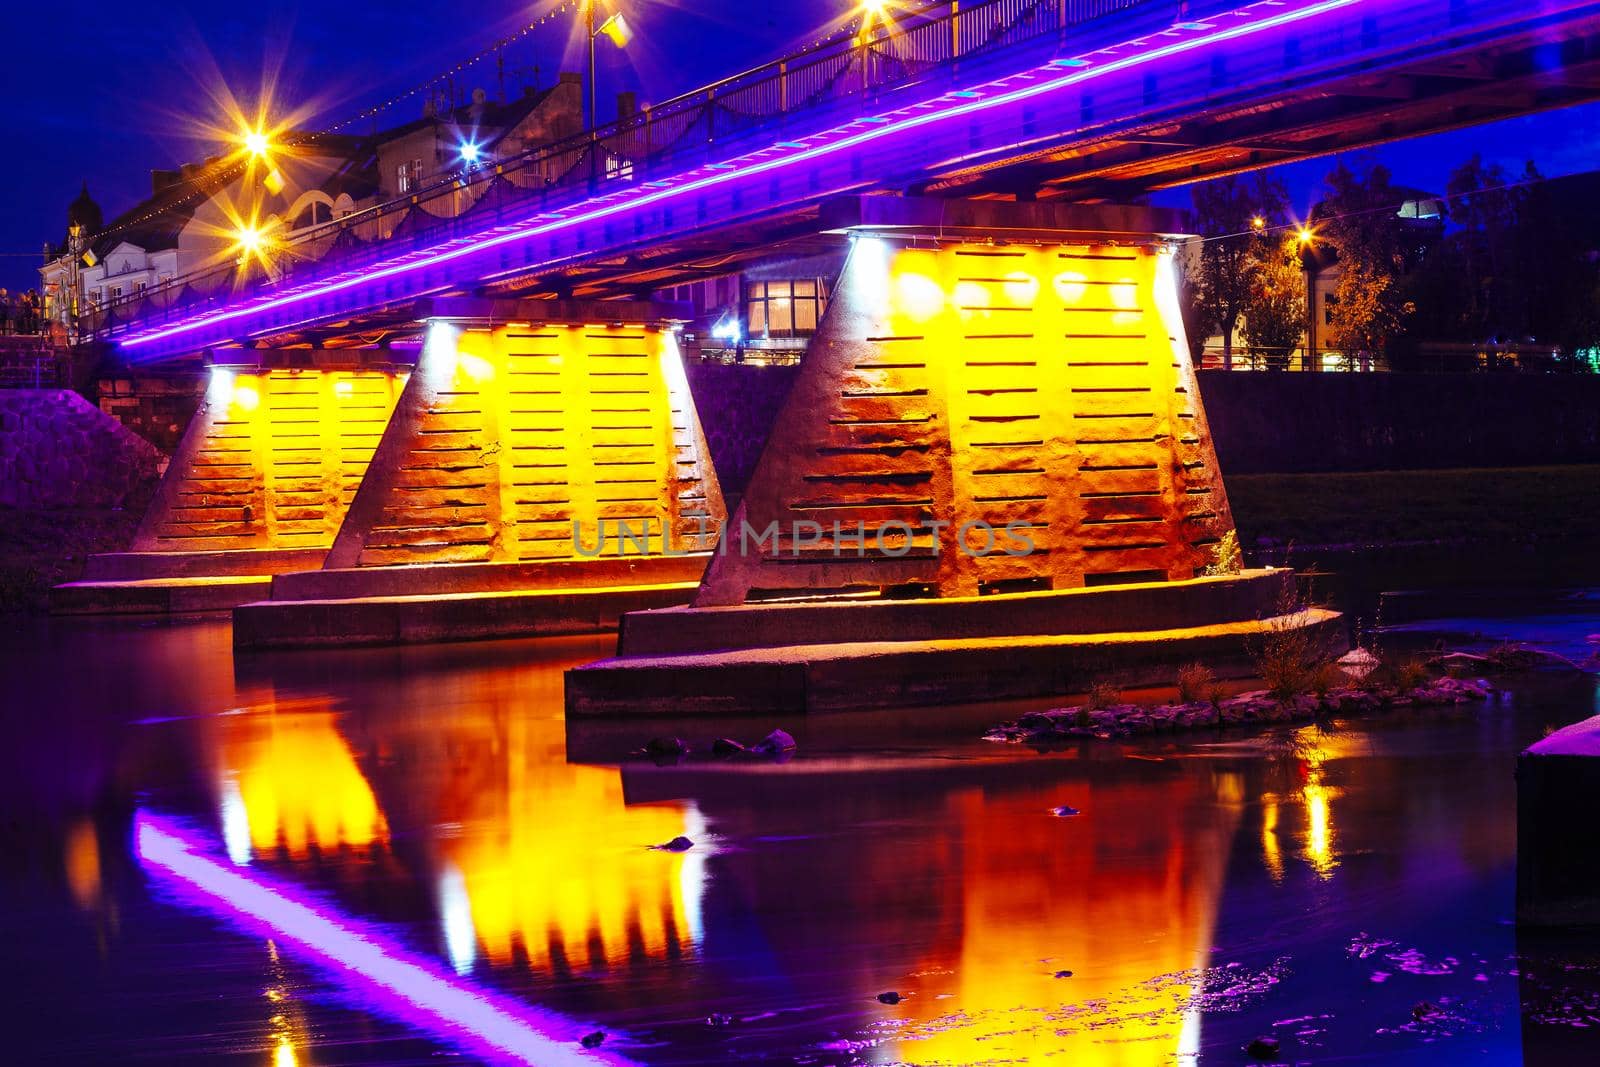 bridge night city reflected in water with lights and reflections. Uzghorod Uzhhorod